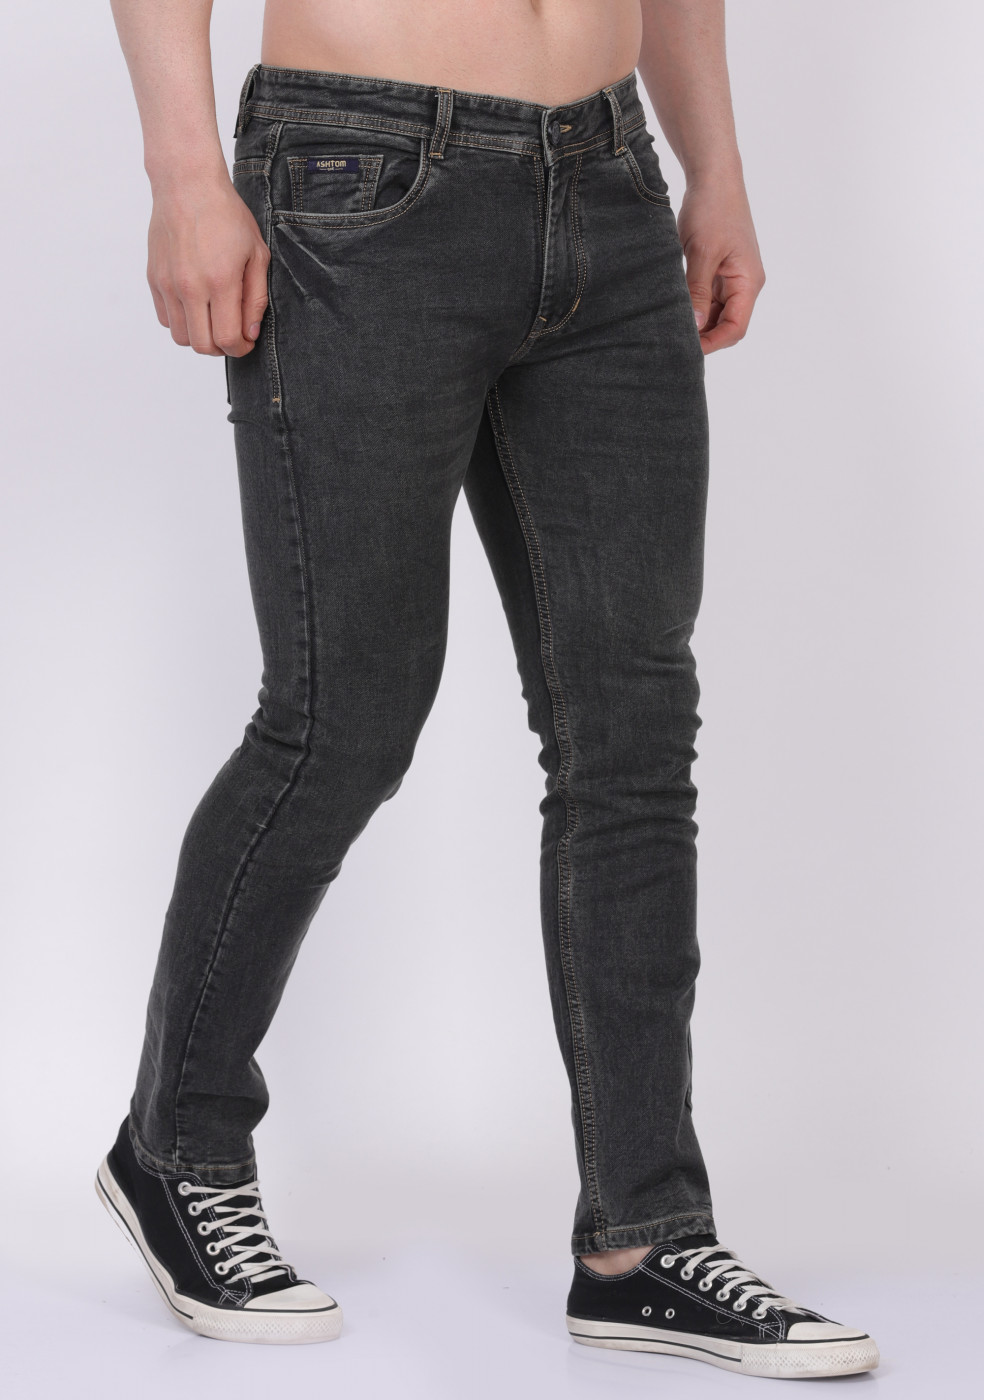 TINT Stretchable Denim Jeans For Men